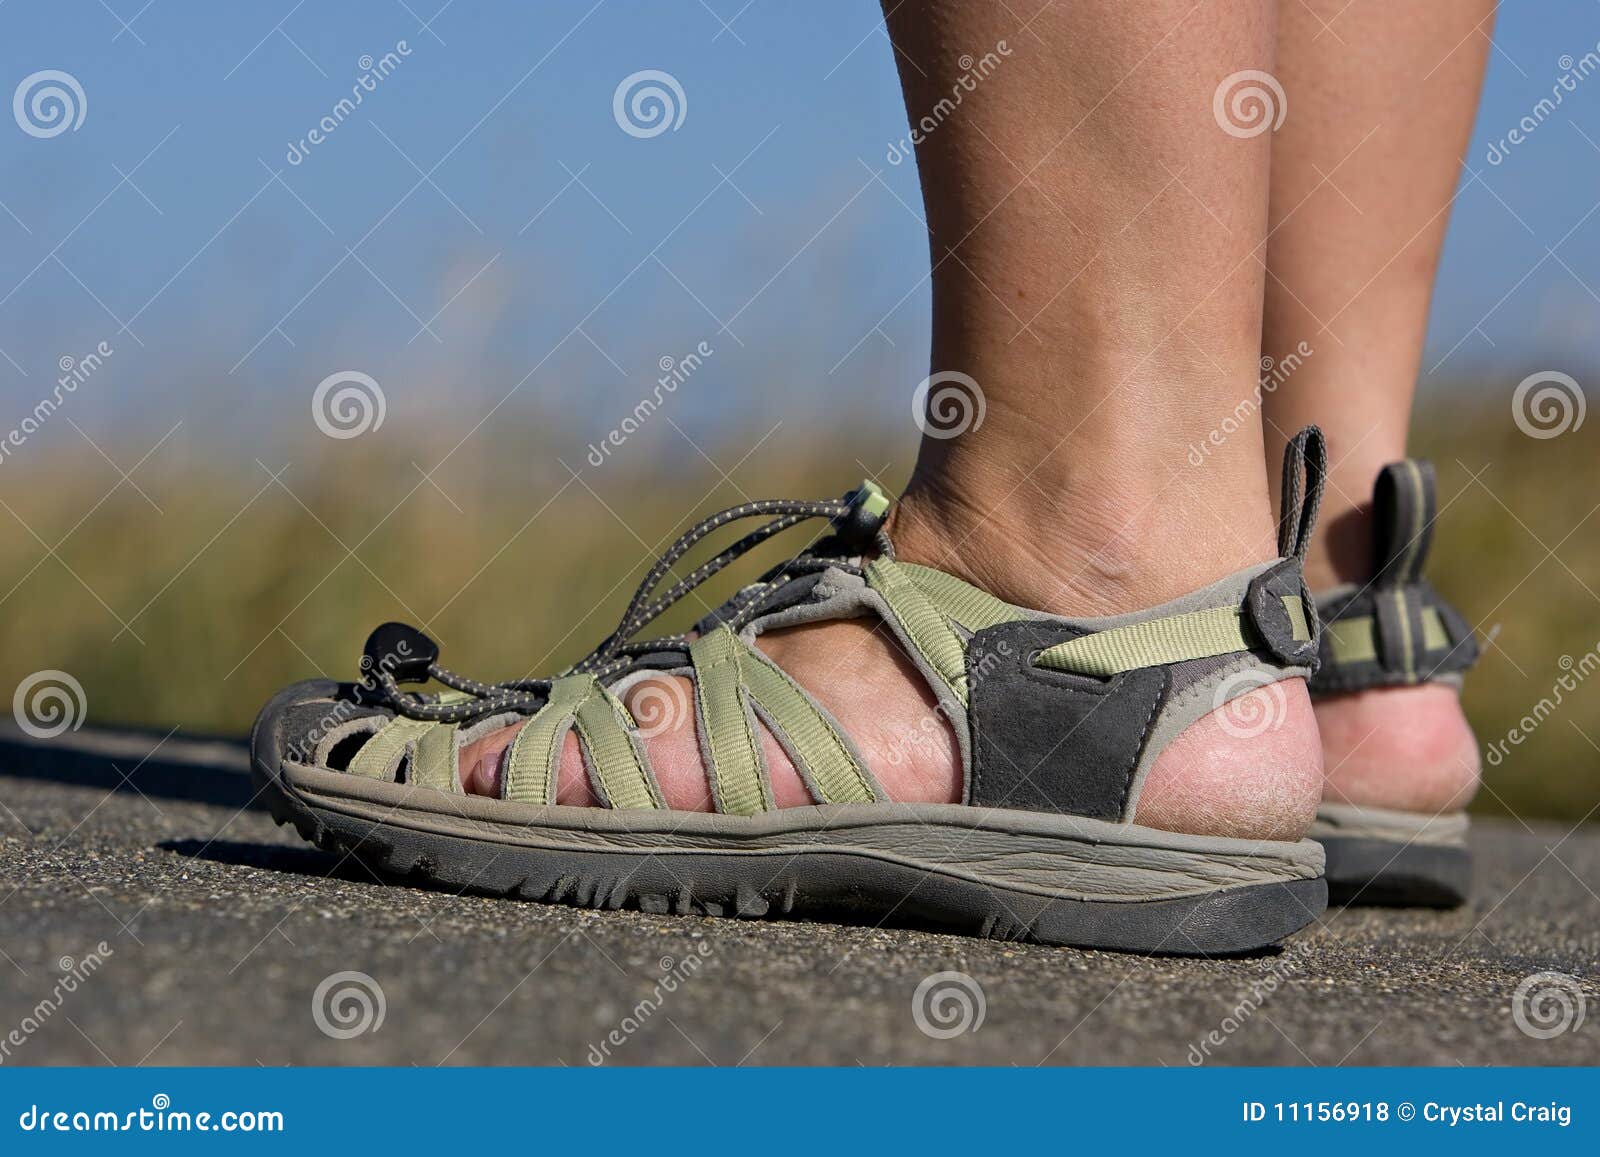 active feet wearing sports beach sandals